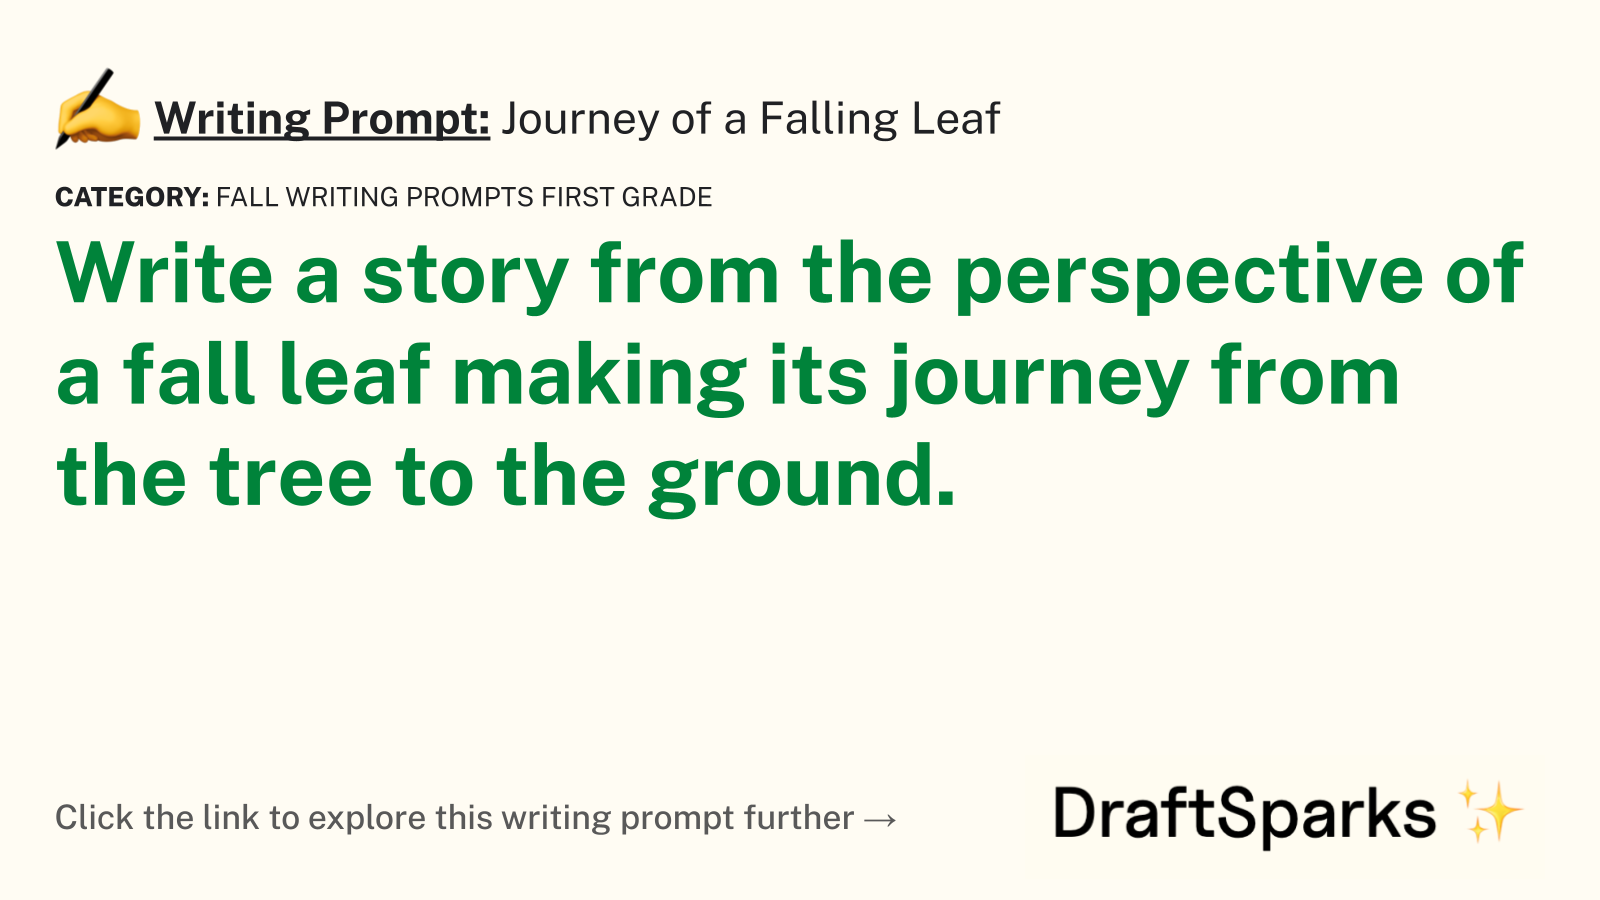 Journey of a Falling Leaf